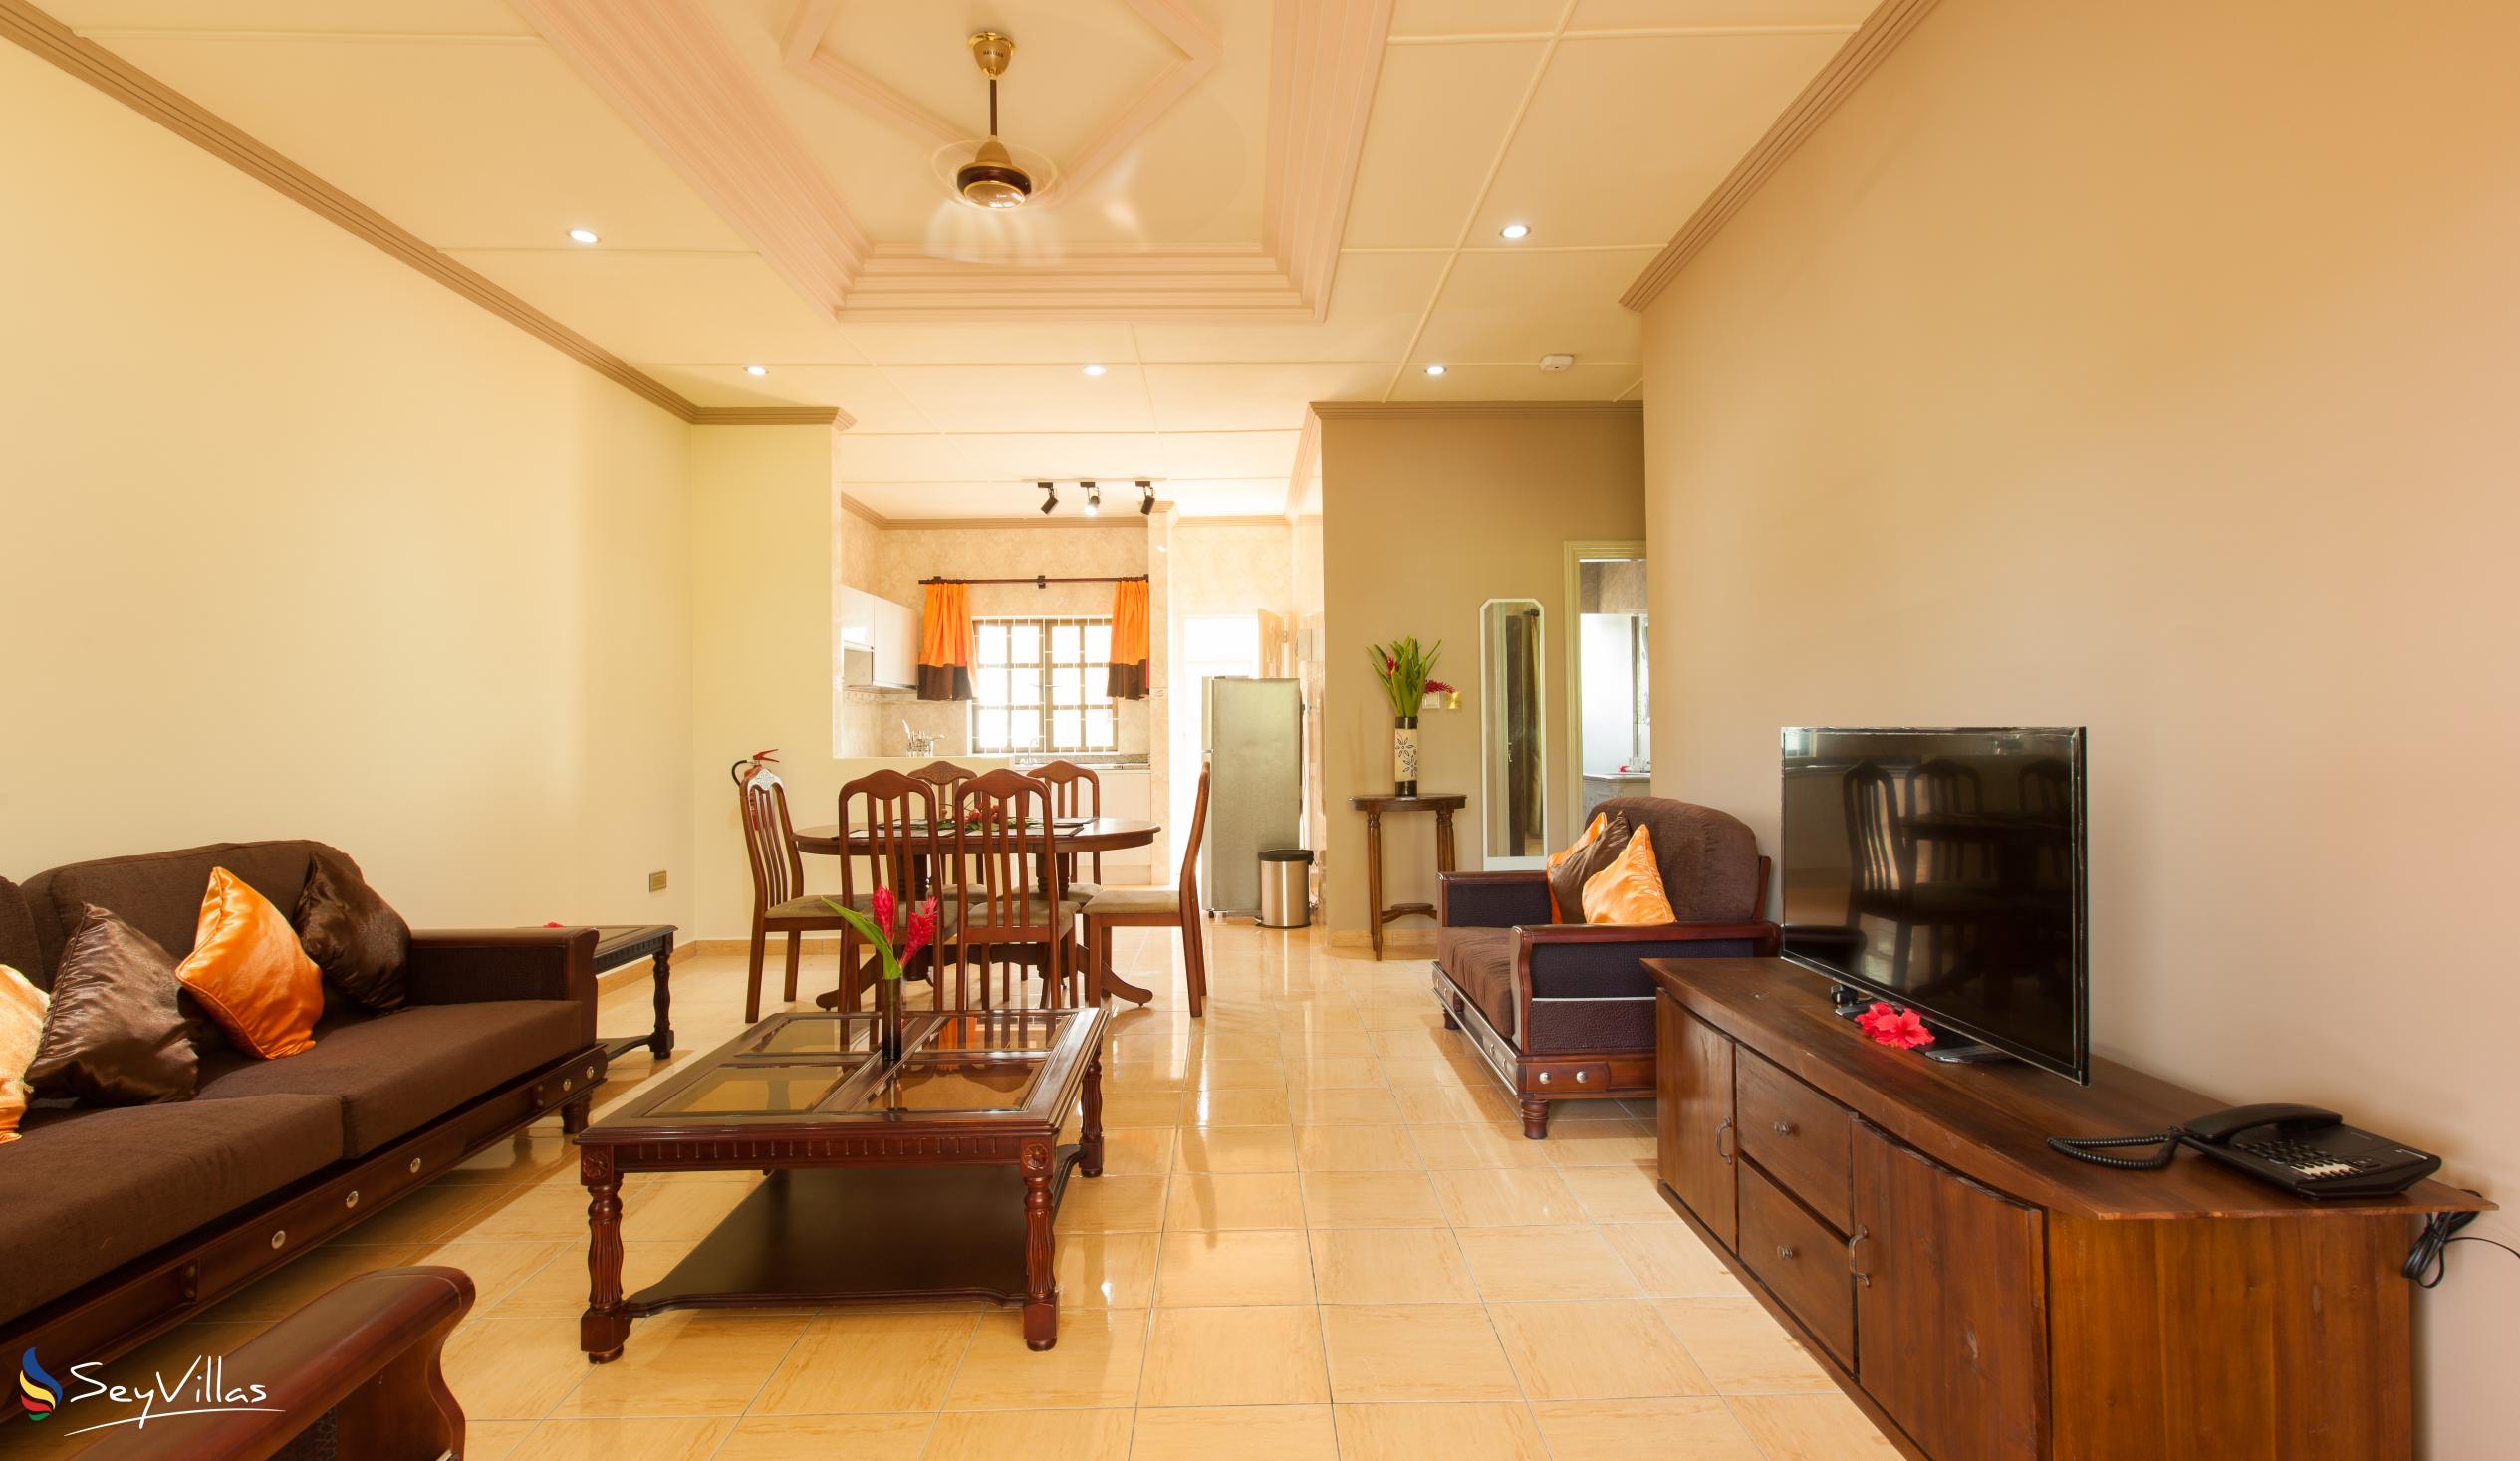 Foto 37: Chez Bea Villa - Appartement 2 chambres - Praslin (Seychelles)